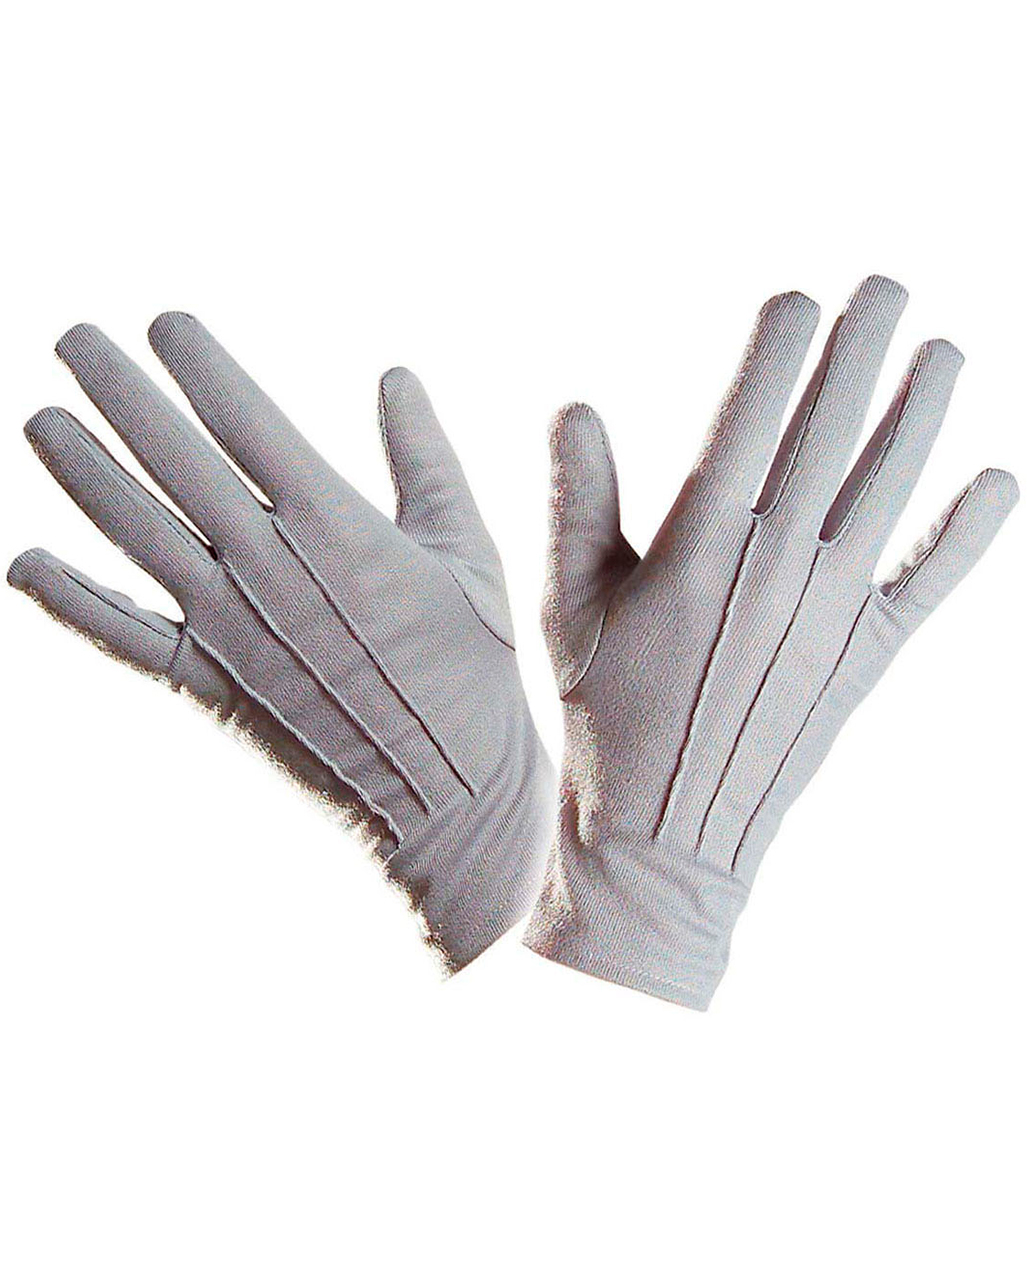 Fabric glove gray gloves gray | horror 